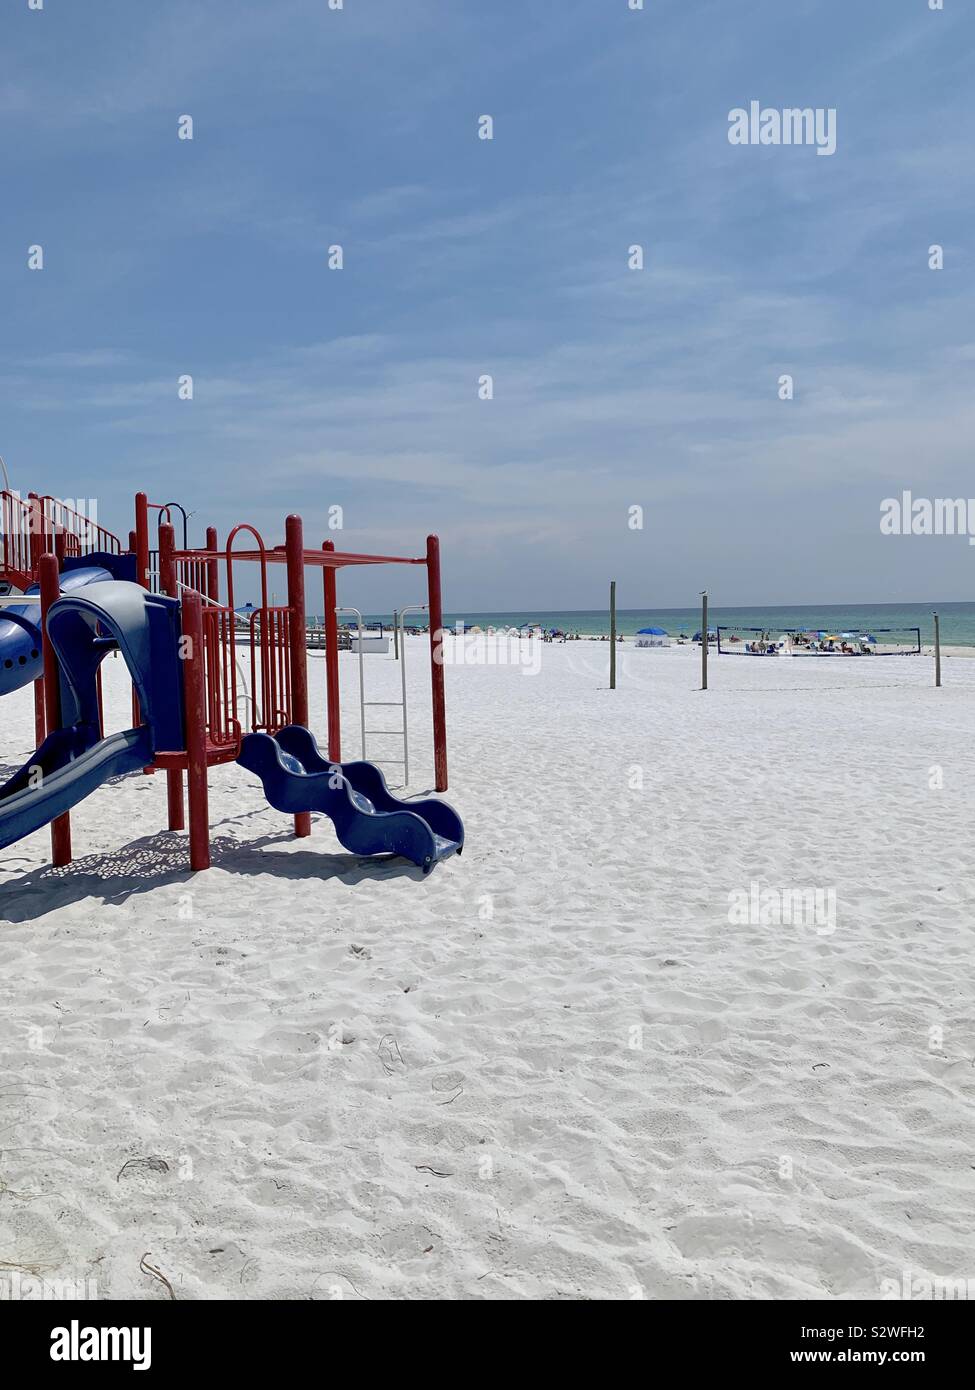 Outdoor play equipment on white sand beach Stock Photo